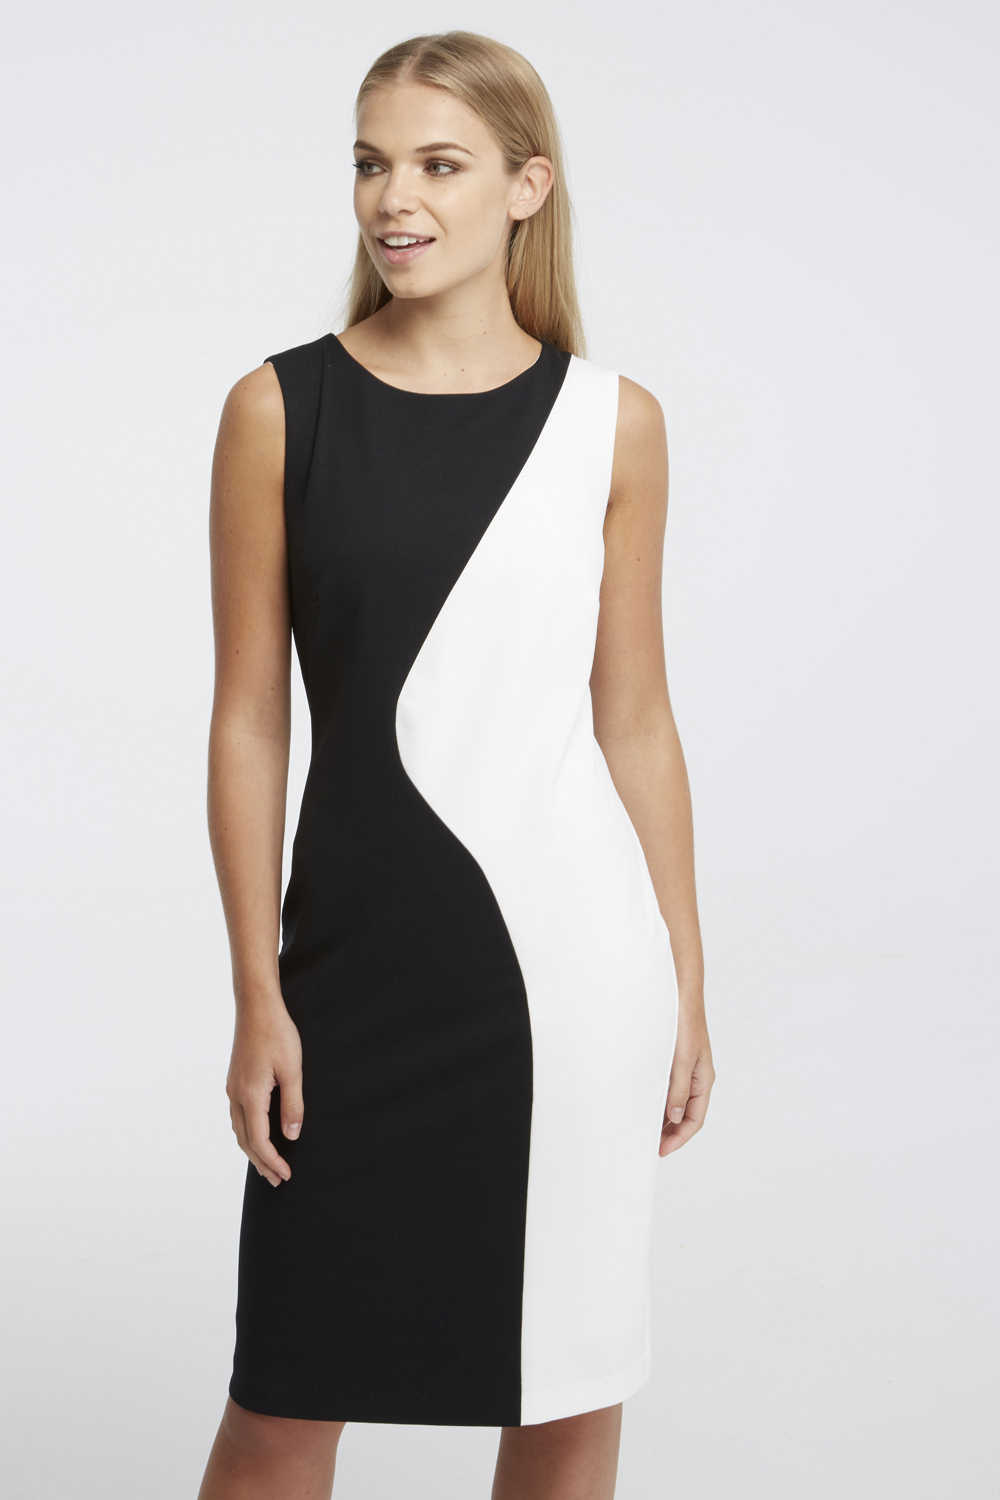 Buy > black and white block dress > in stock